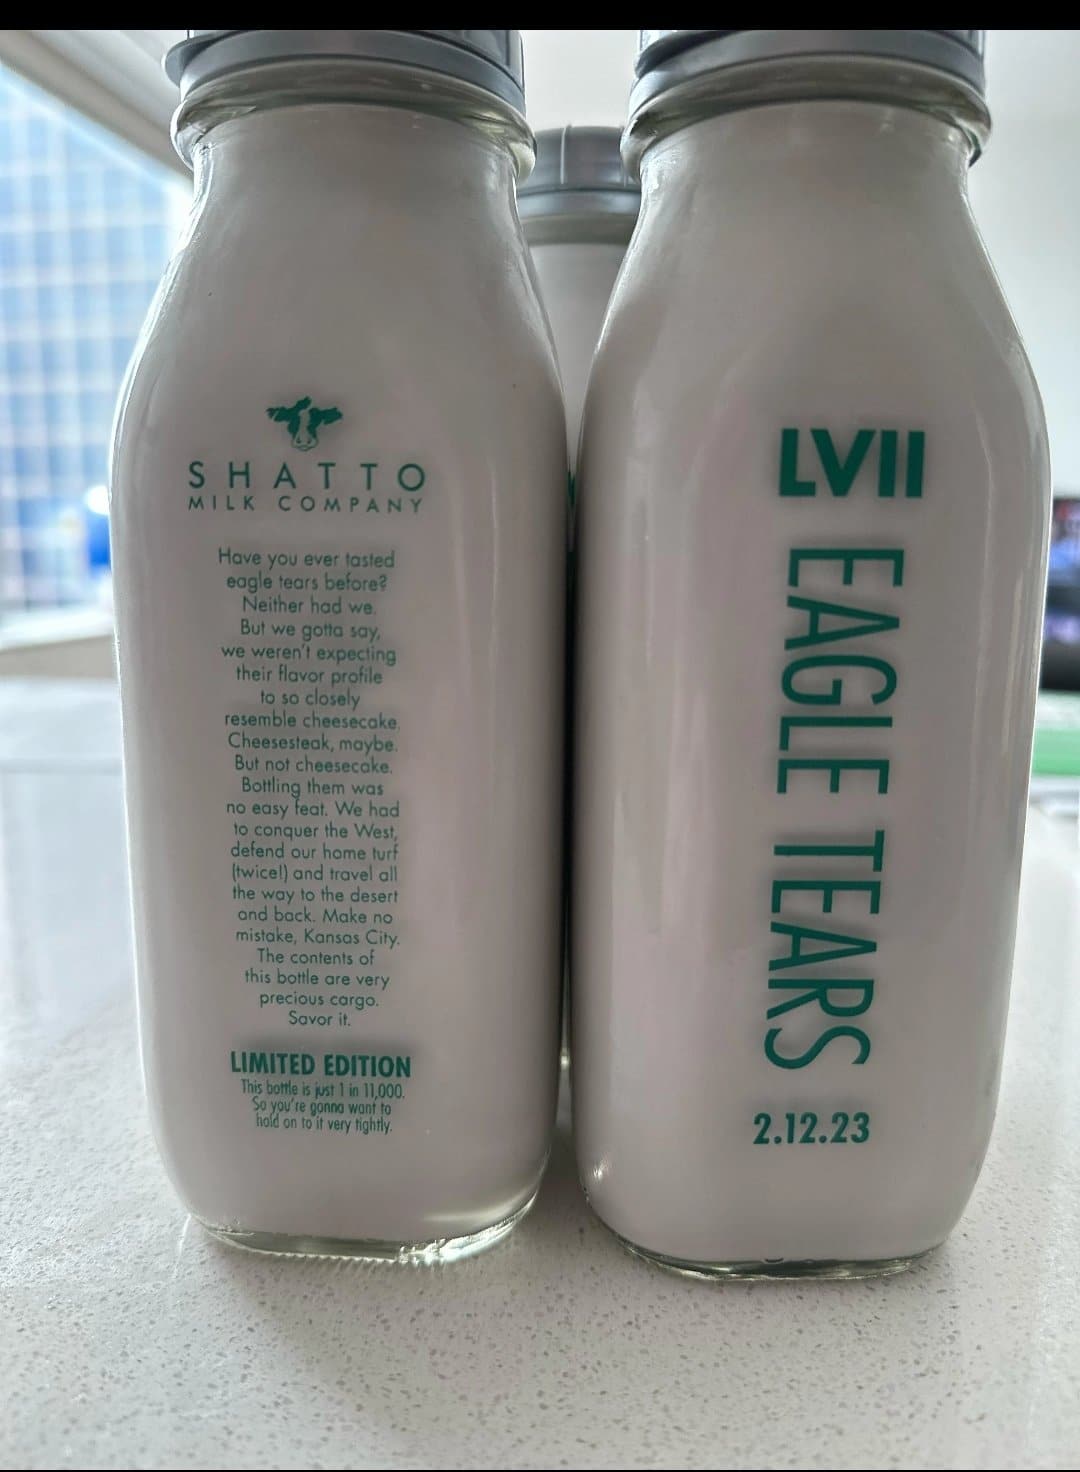 A Missouri Milk Company is Selling Bottled “Eagle Tears”